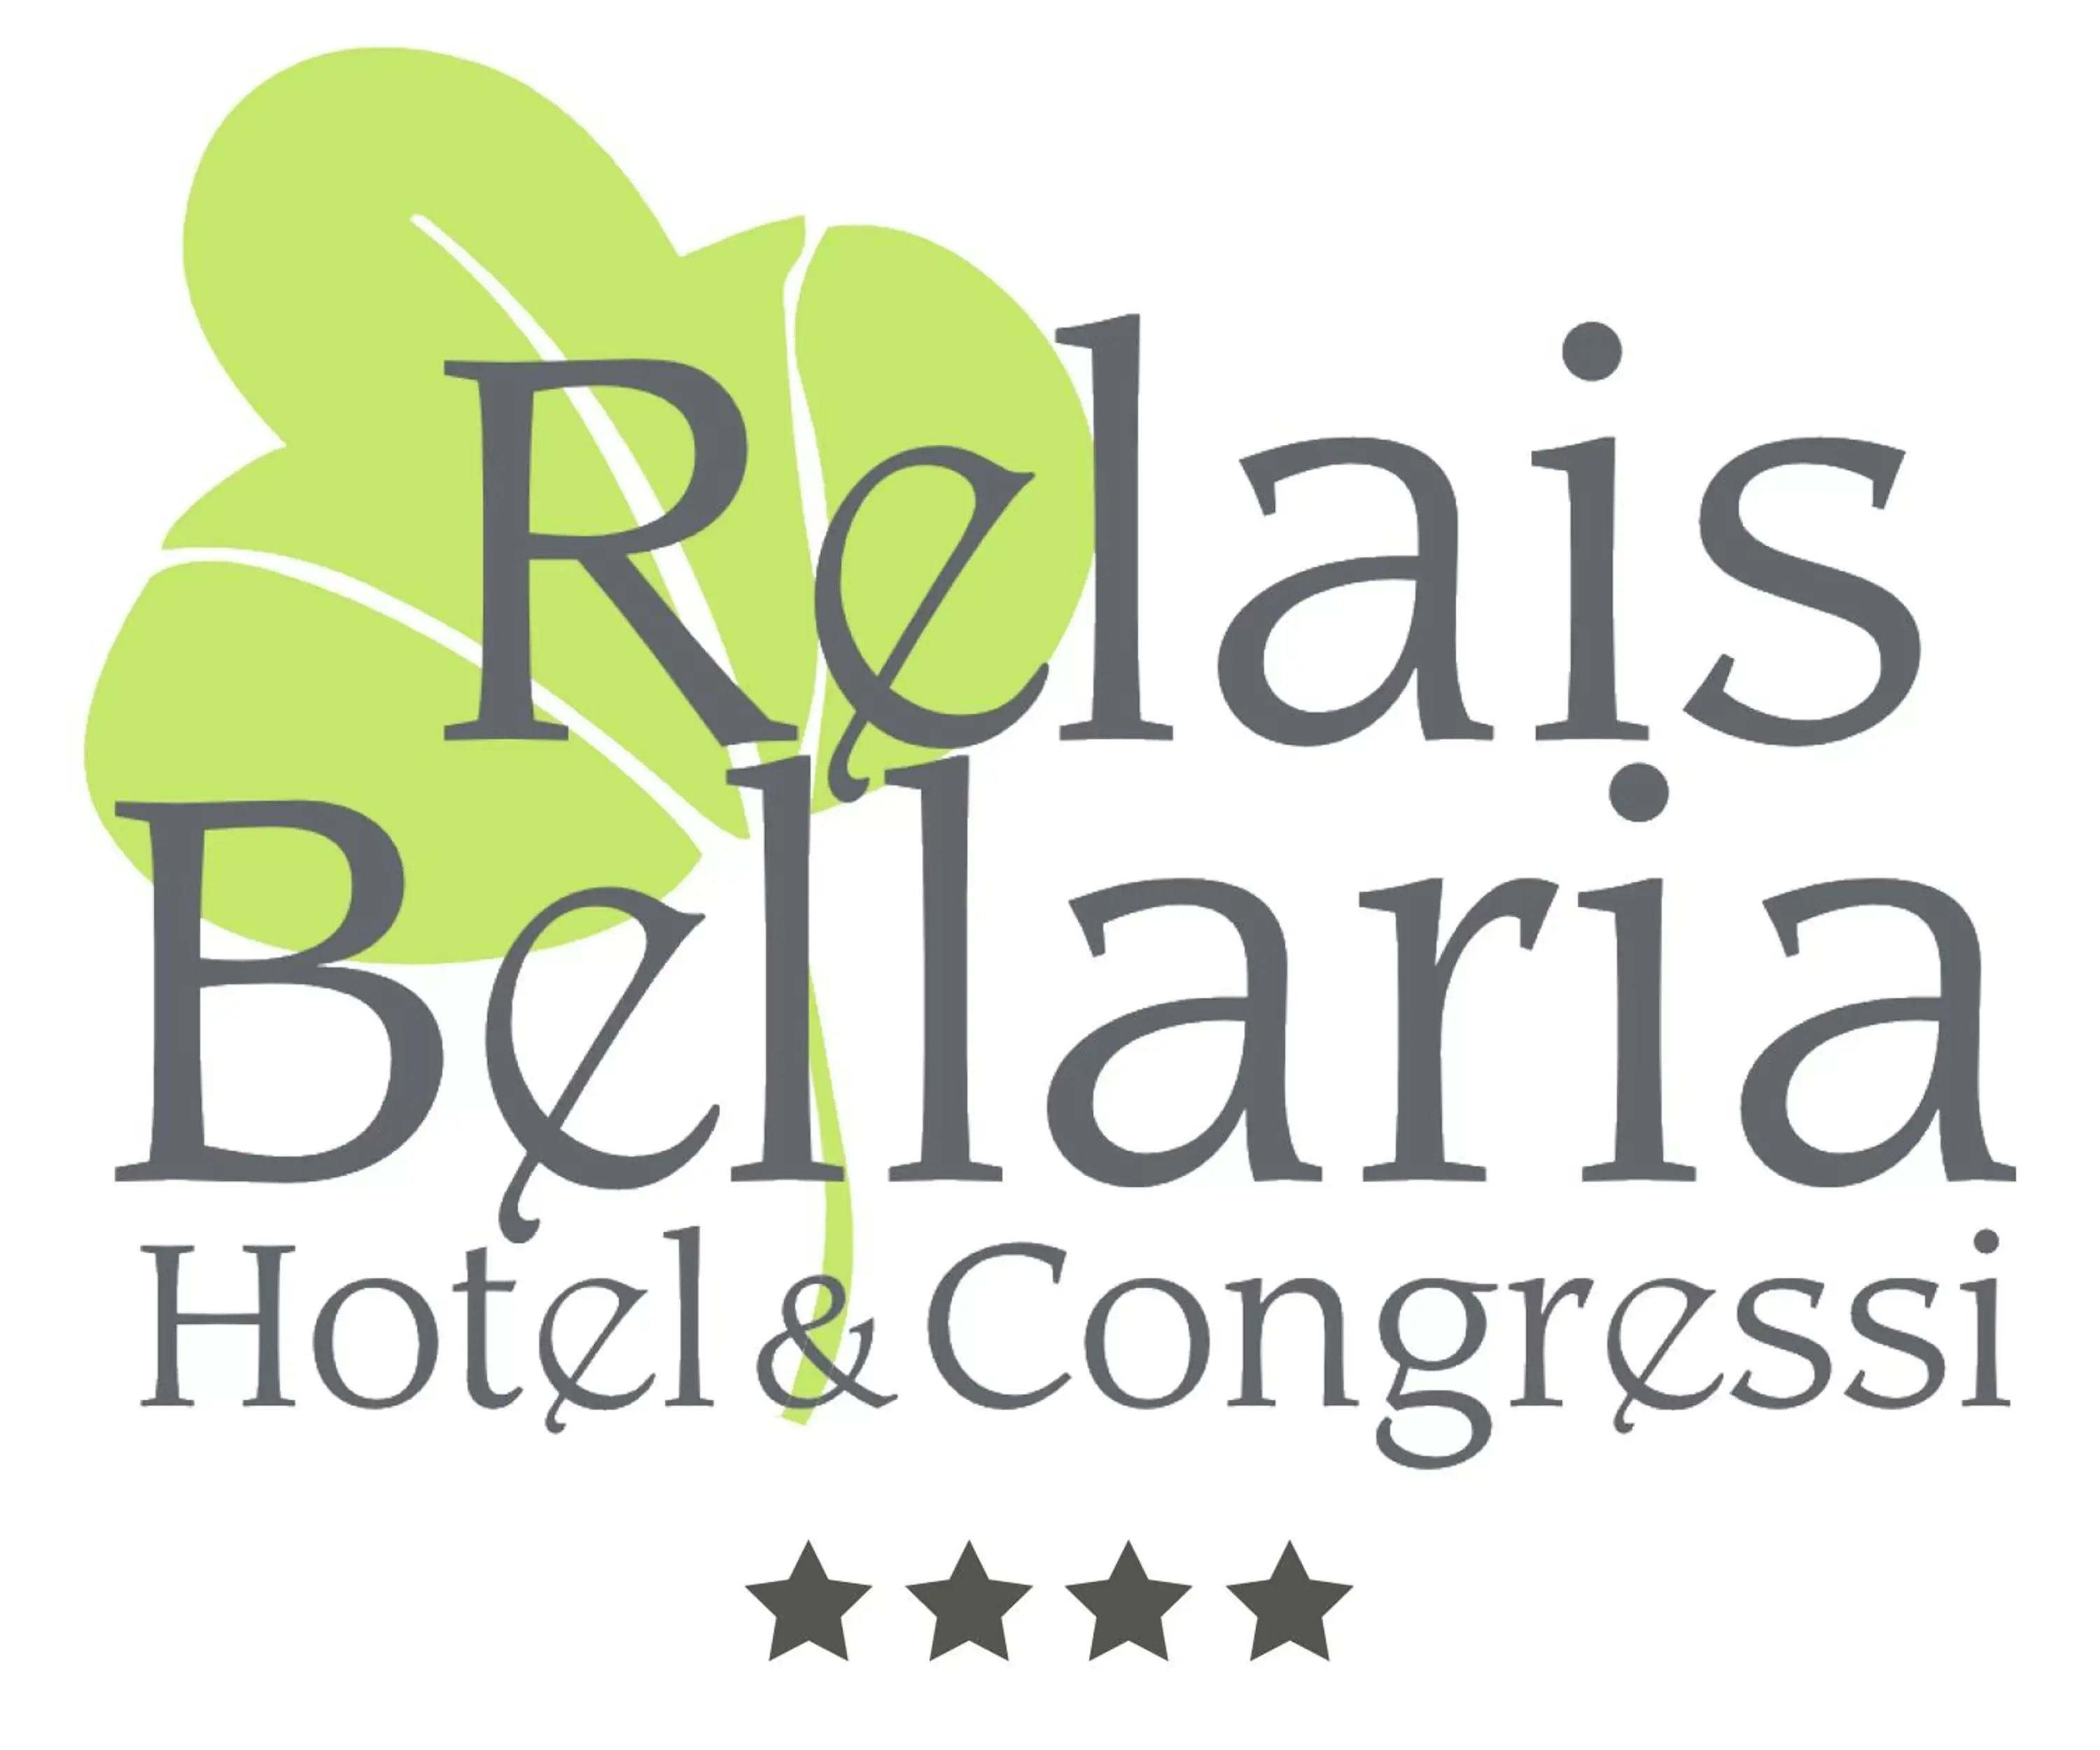 Property logo or sign, Property Logo/Sign in Relais Bellaria Hotel & Congressi